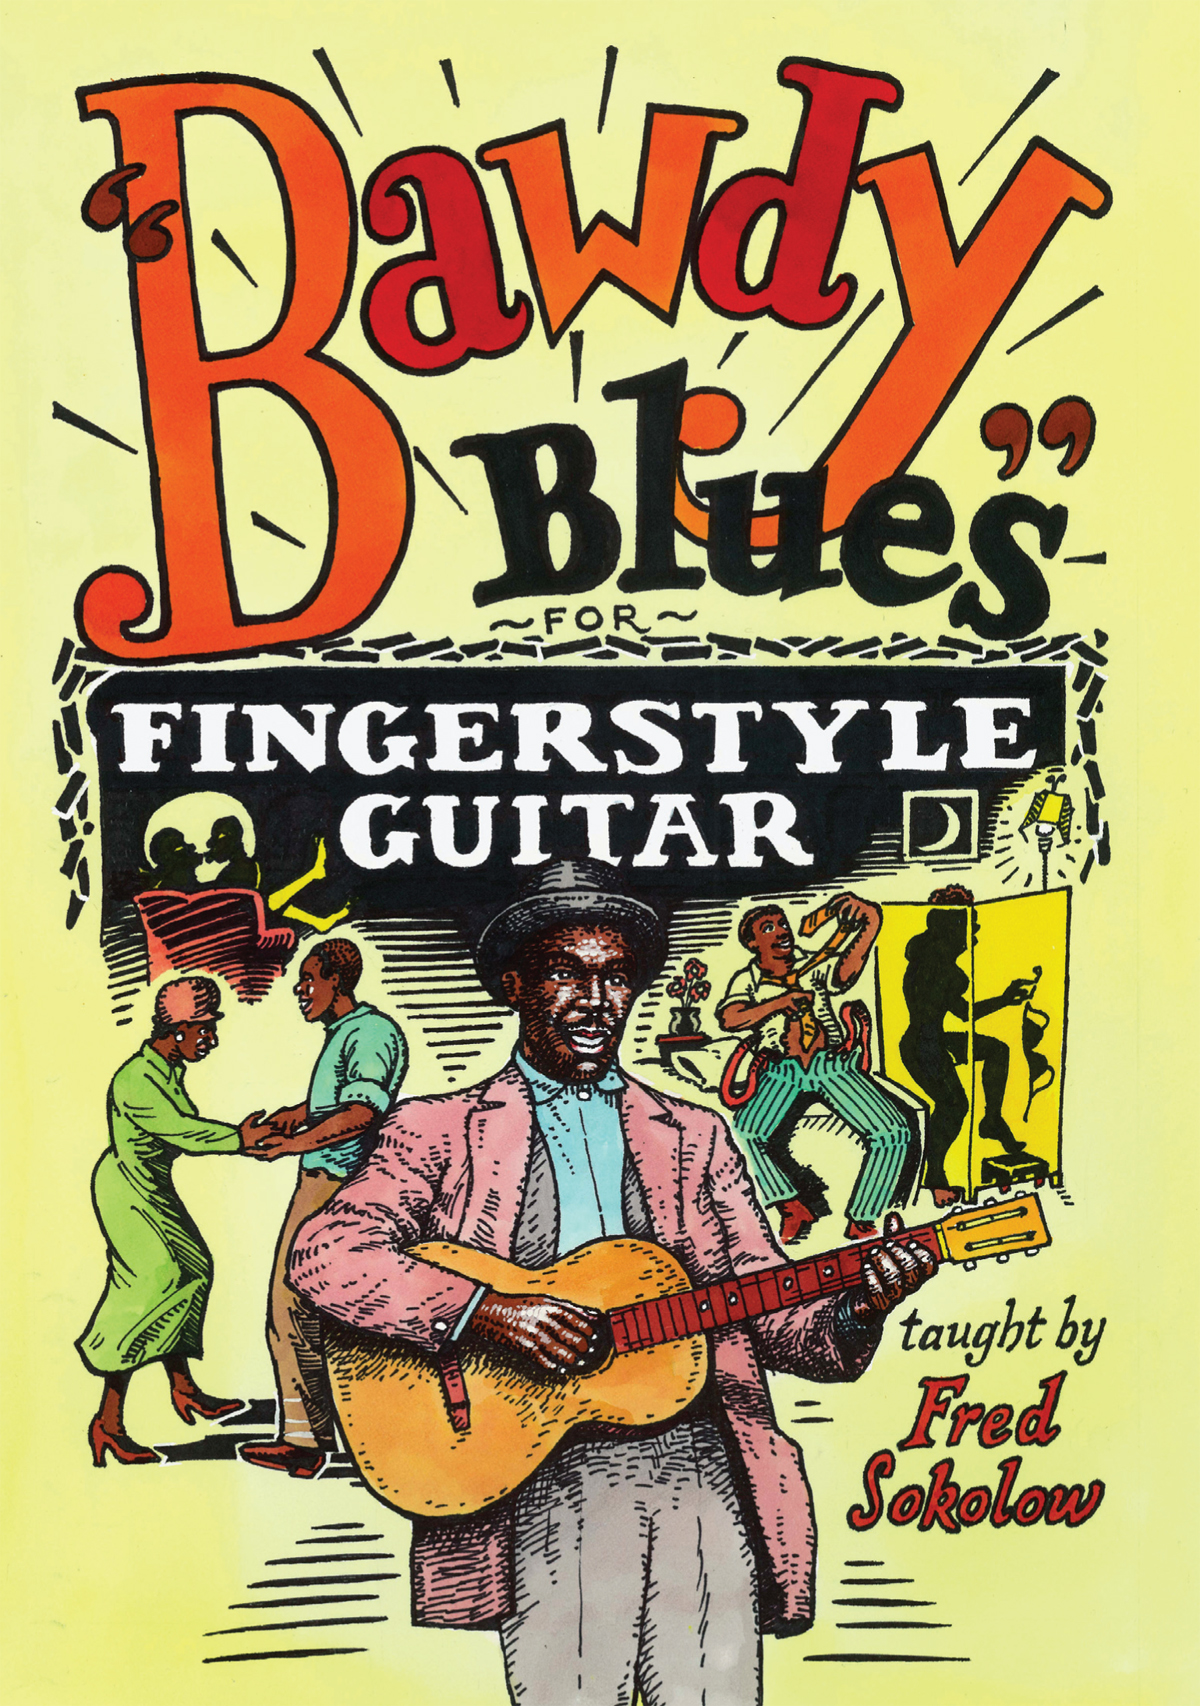 Fred Sokolow: Bawdy Blues For Fingerstyle Guitar: Guitar: Instrumental Tutor